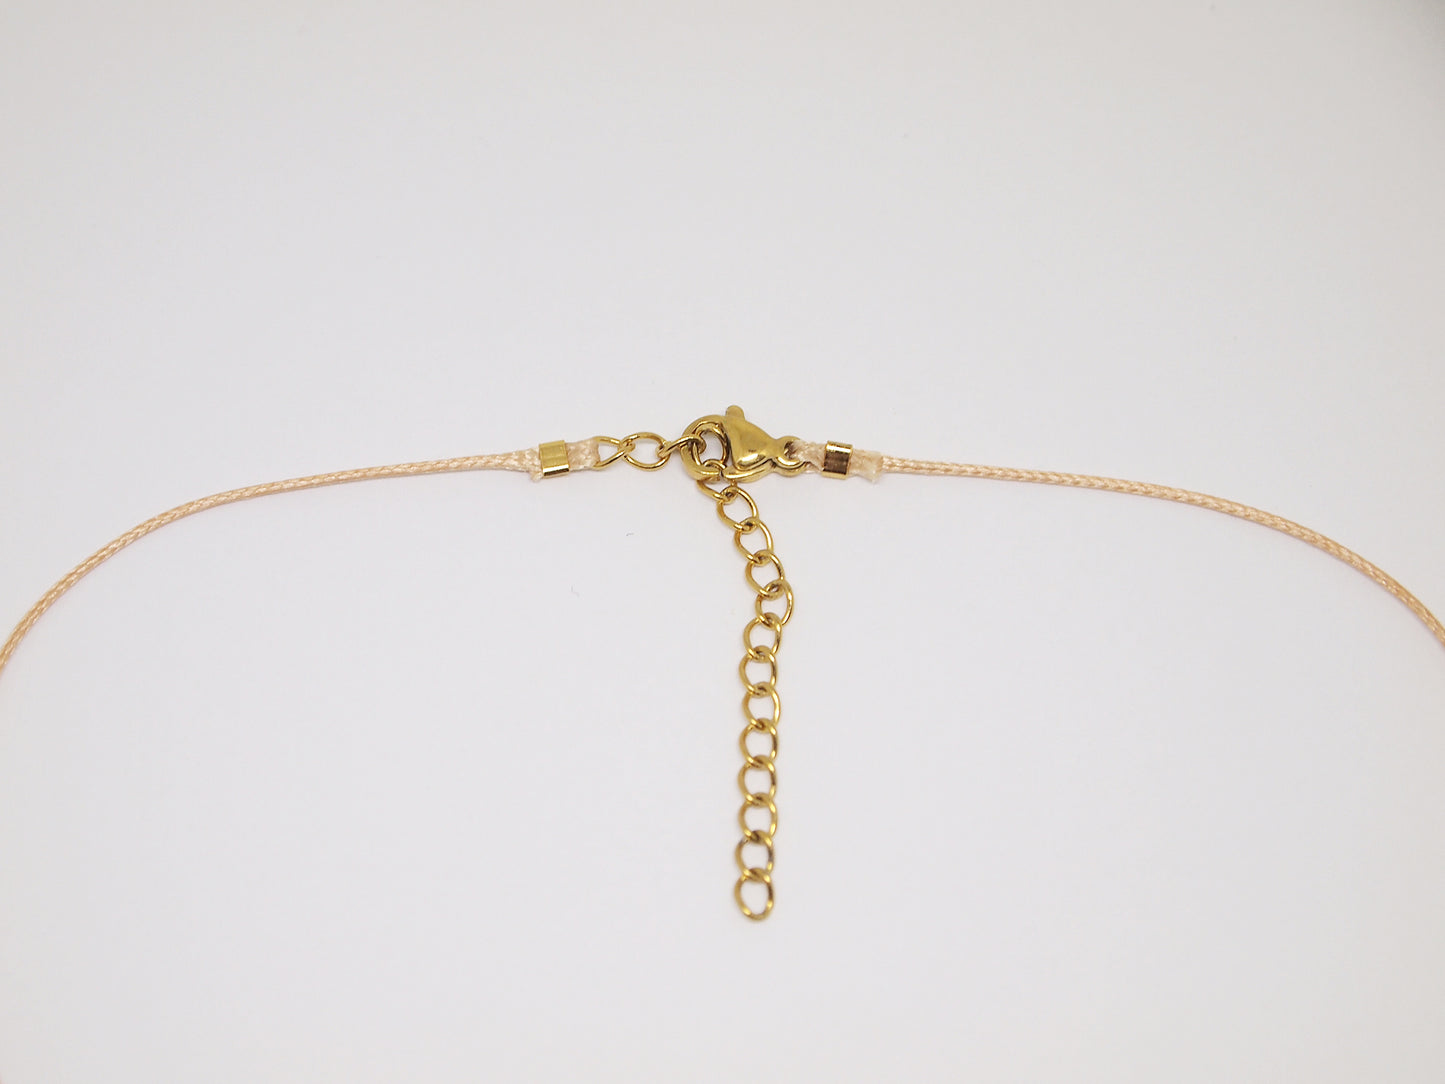 Citrine cord necklace